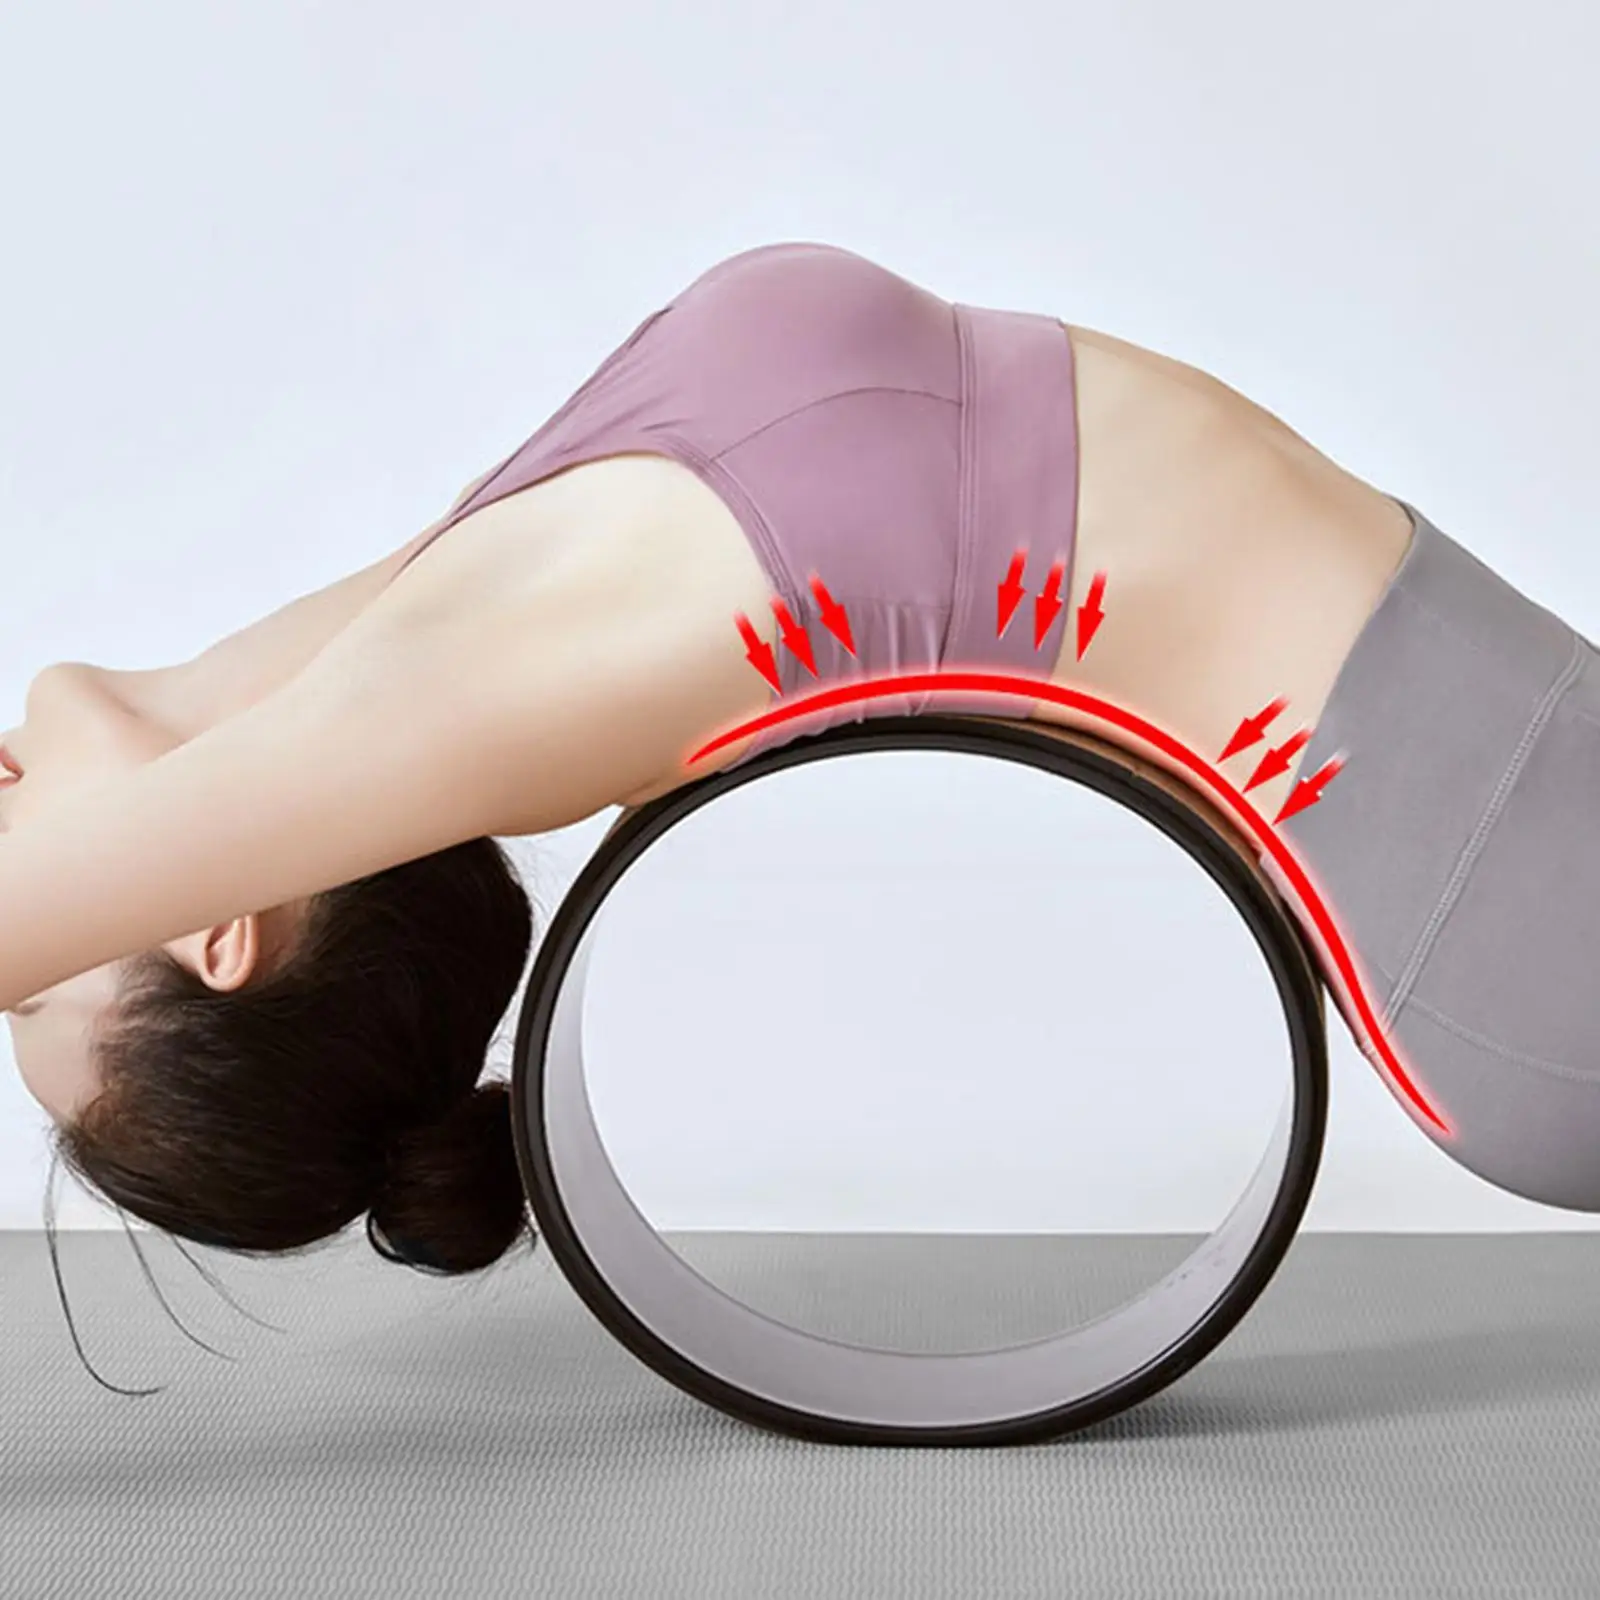 Circle Equipment Flexibility Stretching Durable Balance Wheel for Gym Sports